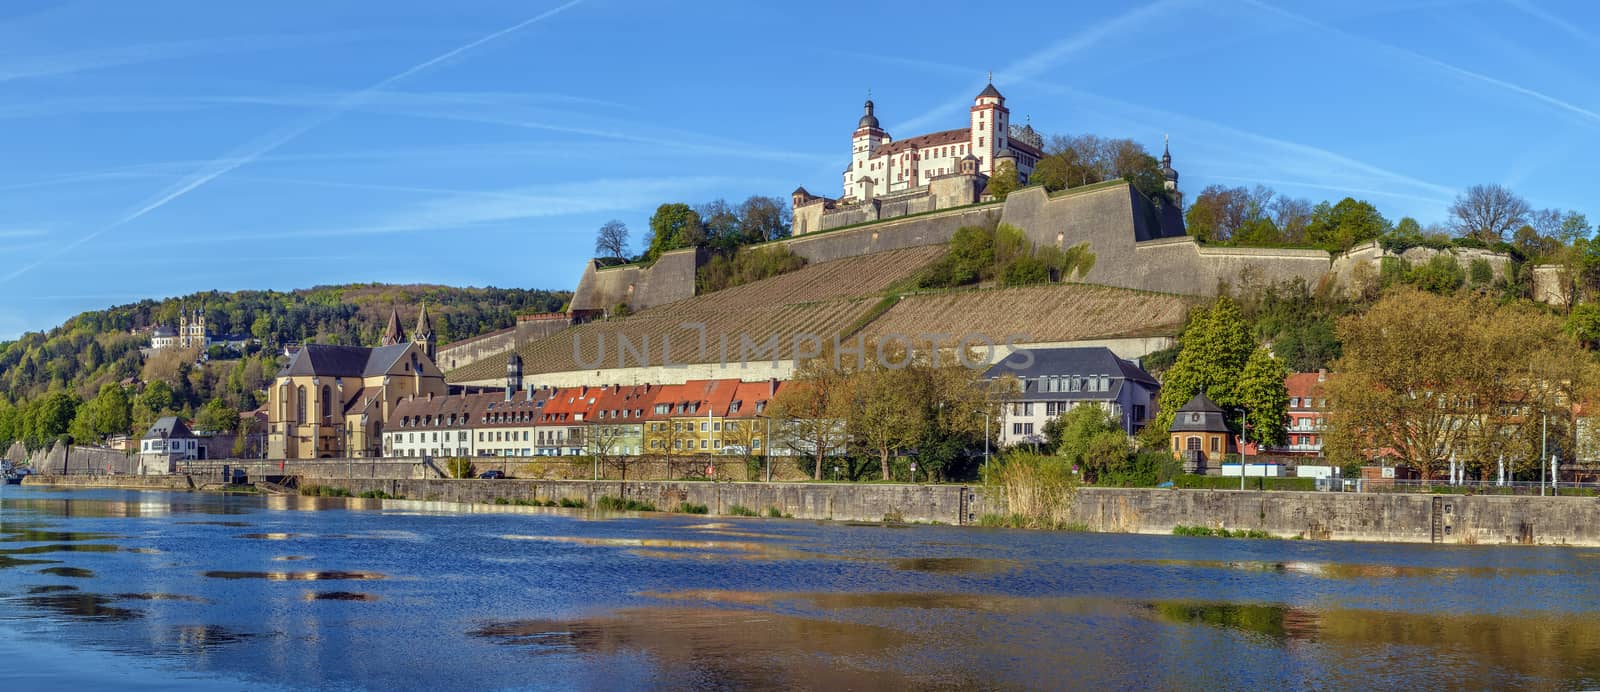 View of Marienberg Fortress, Wurzburg, Germany by borisb17